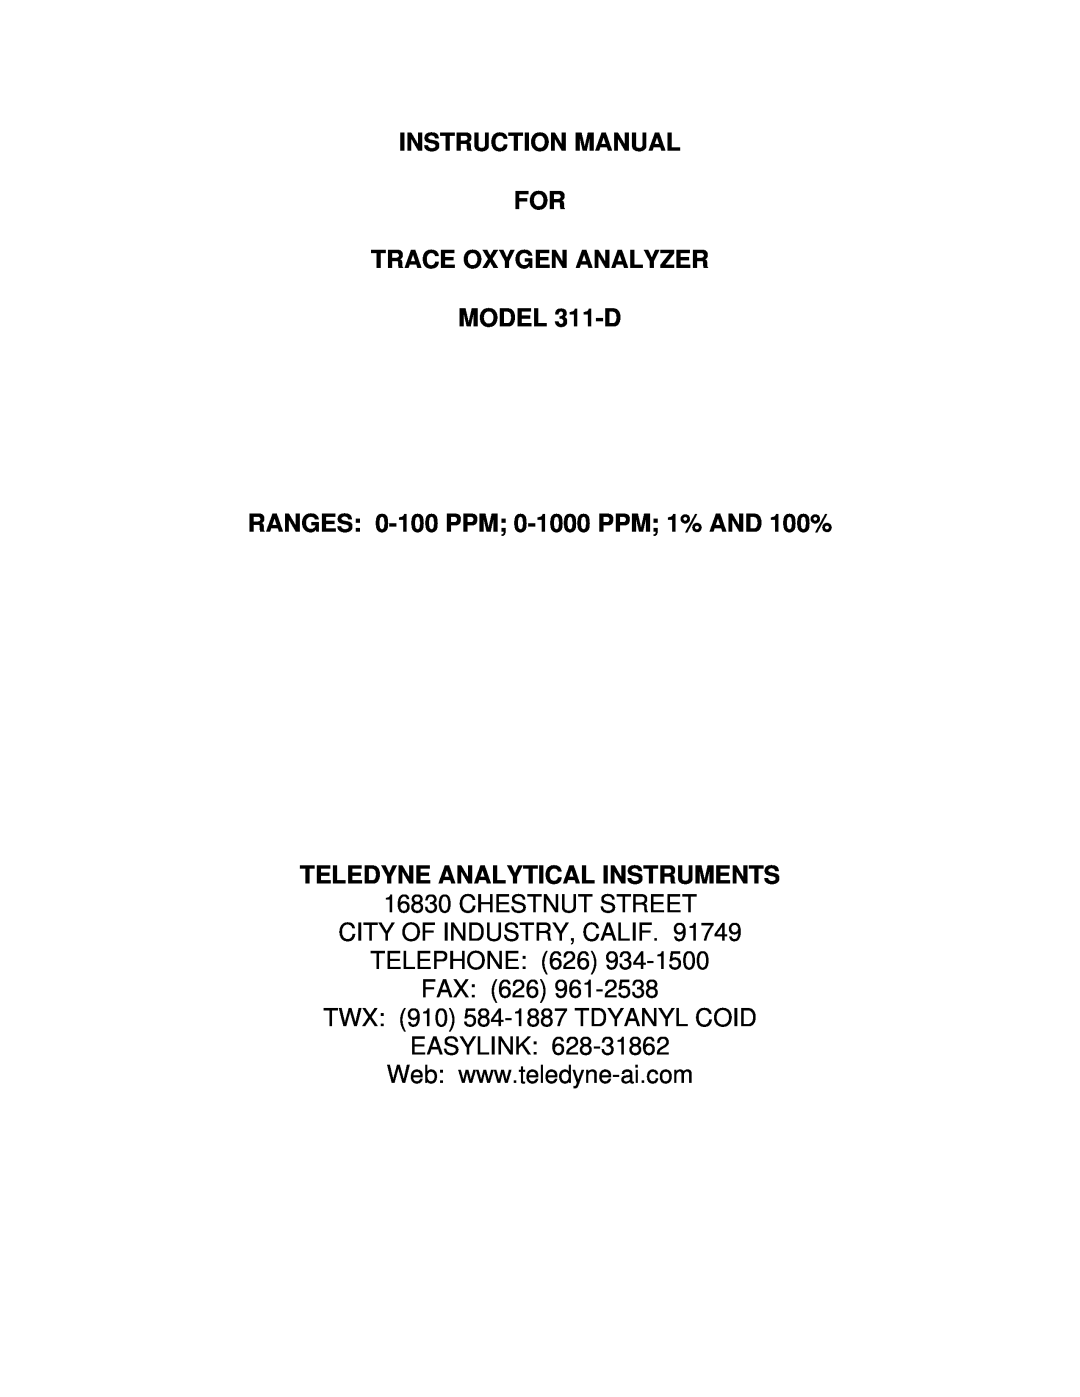 Teledyne instruction manual INSTRUCTION MANUAL FOR TRACE OXYGEN ANALYZER MODEL 311-D, Teledyne Analytical Instruments 